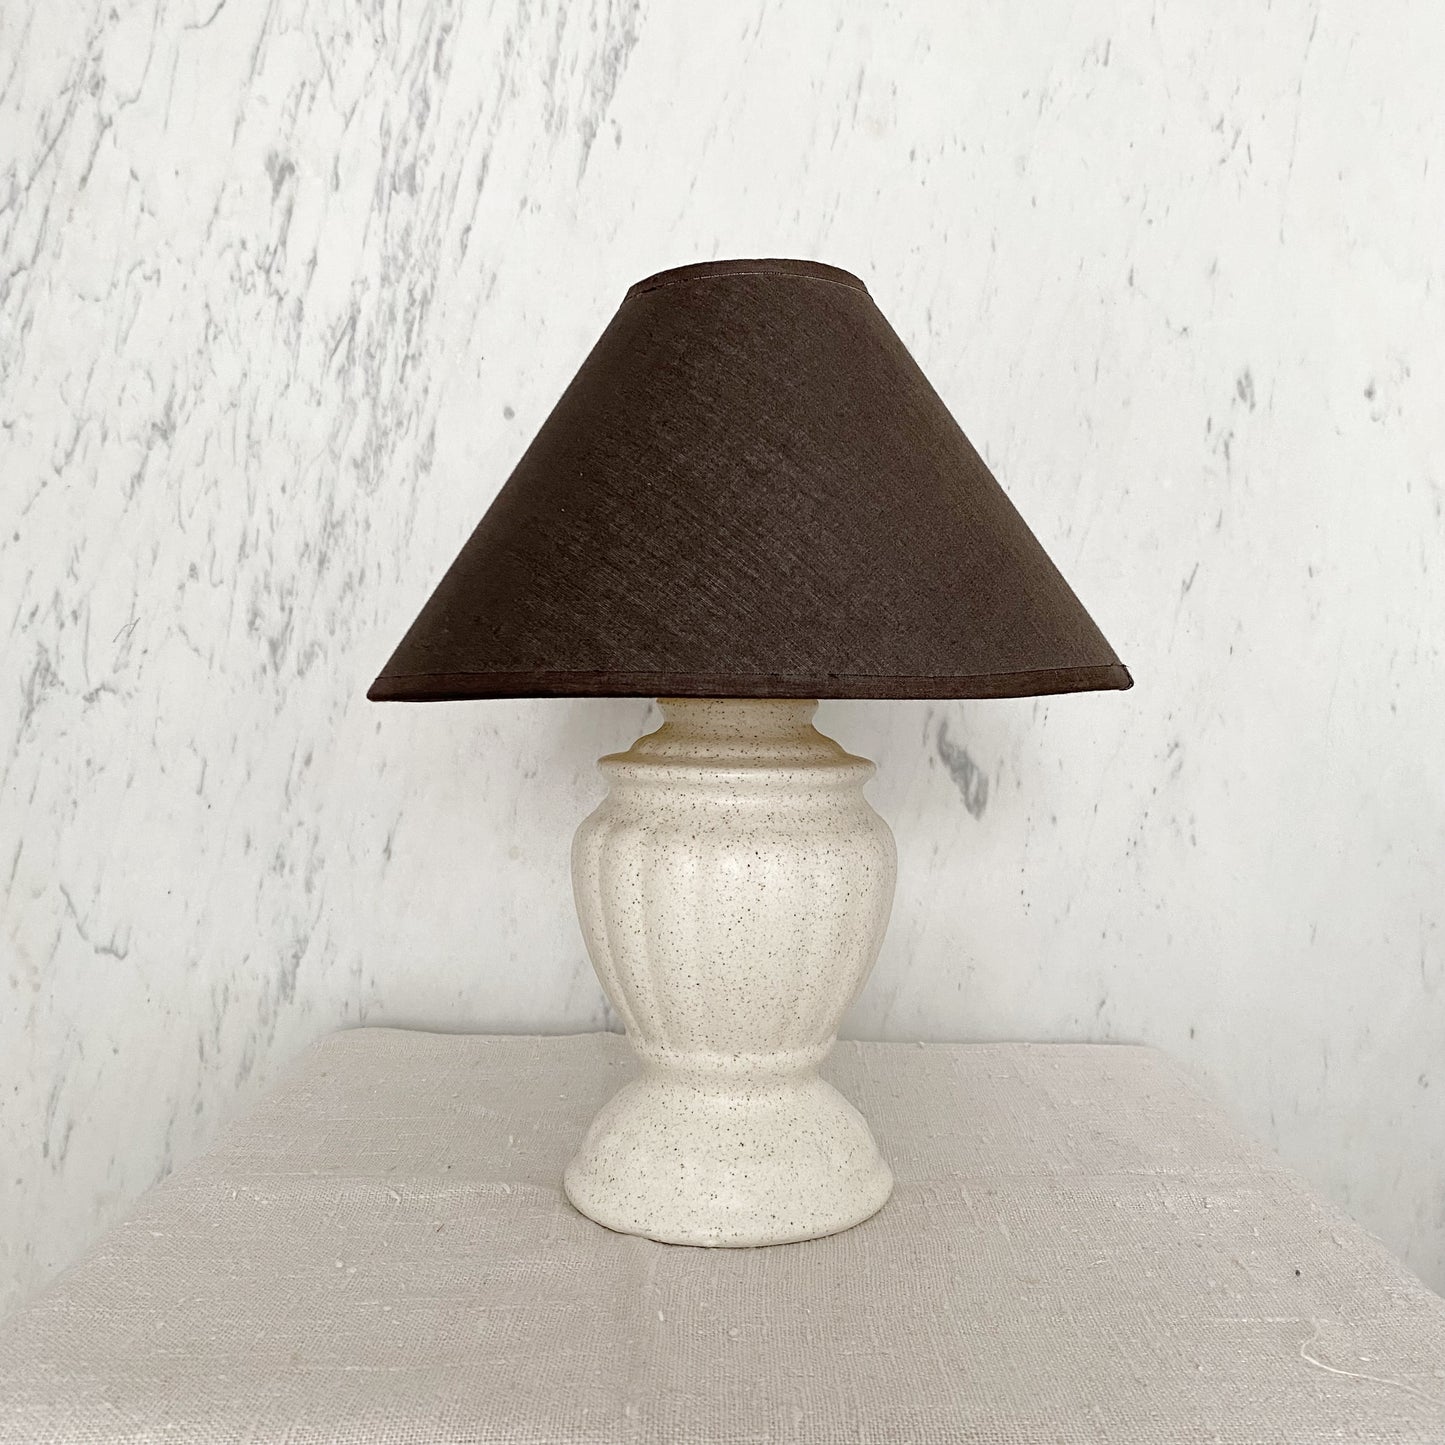 Vintage Ceramic Lamp with Black Shade